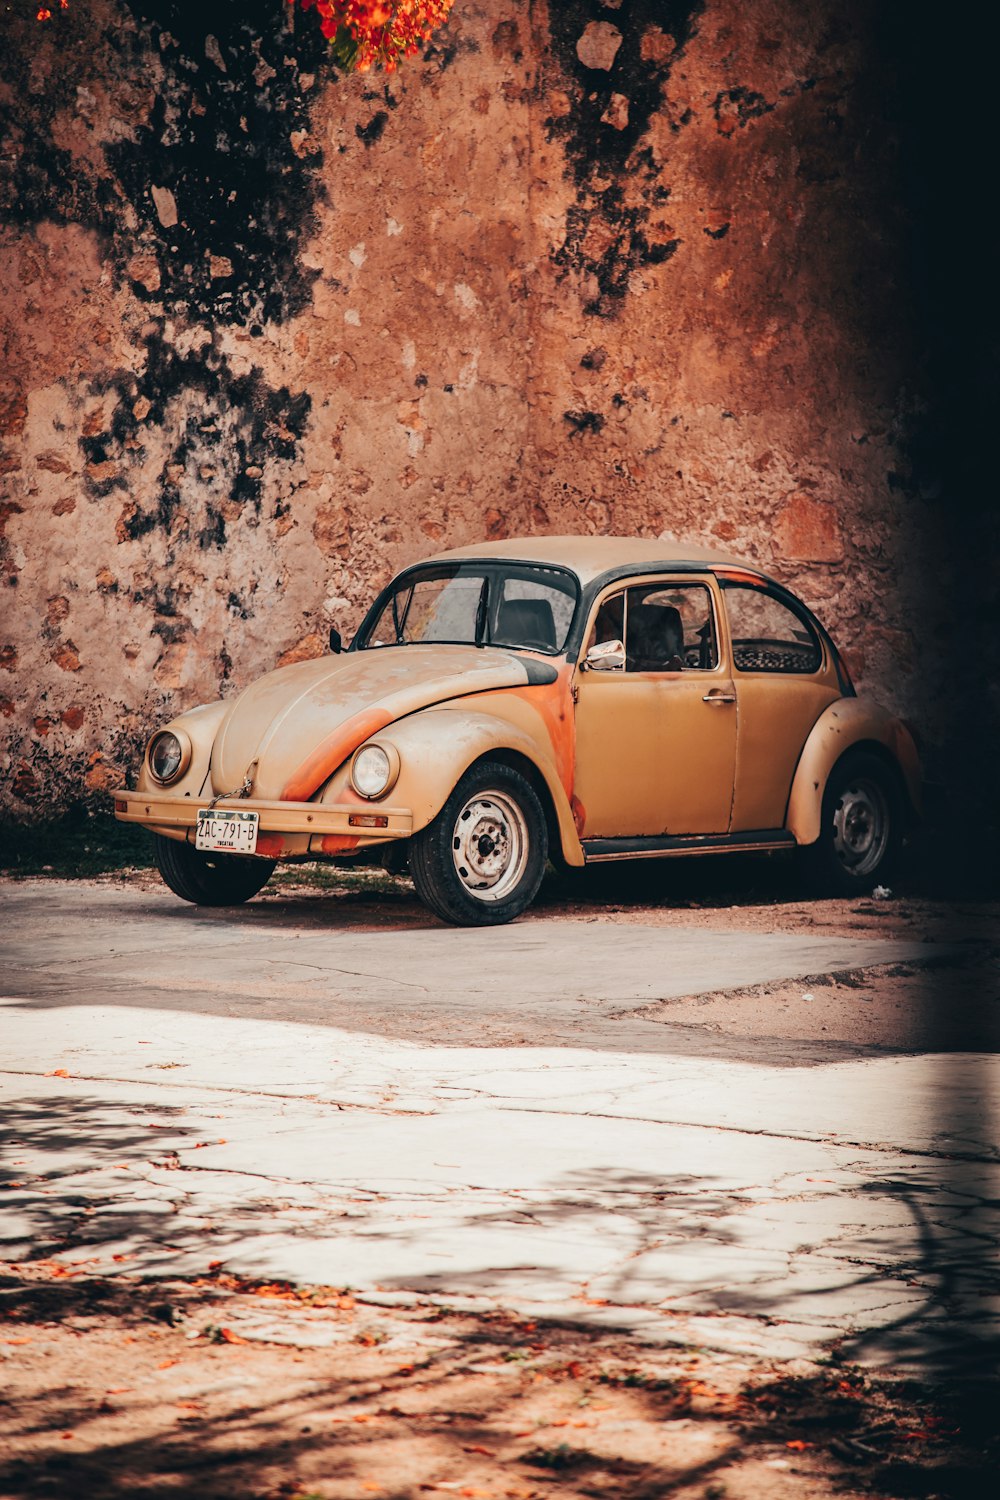 parked brown Volkswagen Beetle photo – Free Wallpaper Image on Unsplash